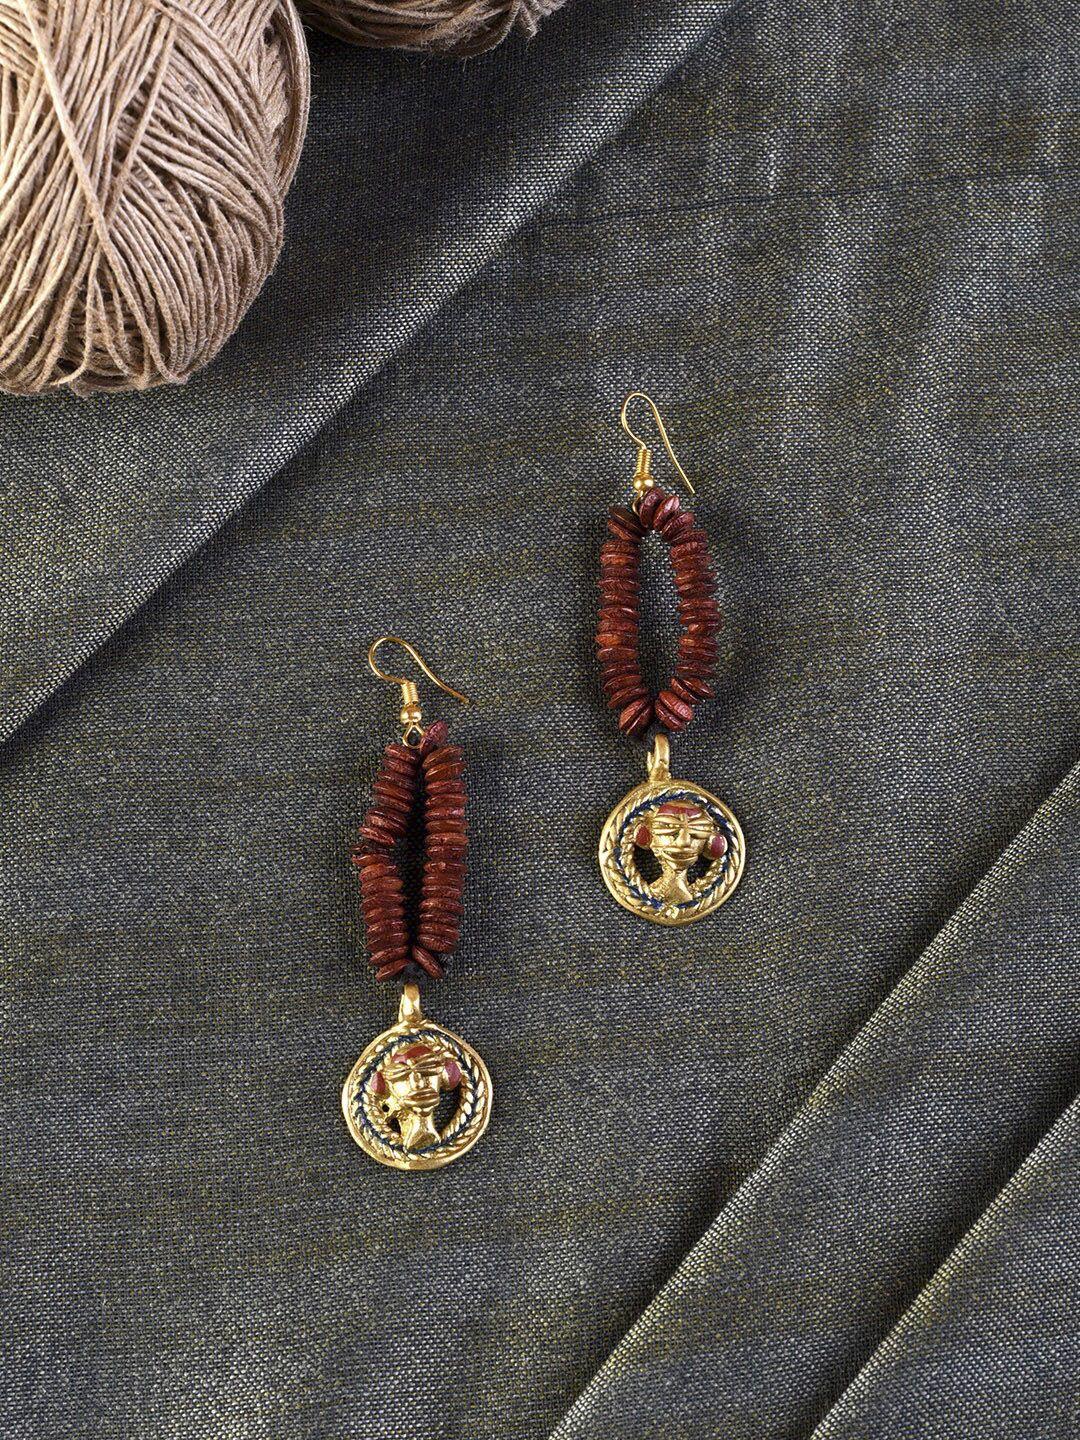 aakriti art creations brown & gold-toned contemporary drop earrings